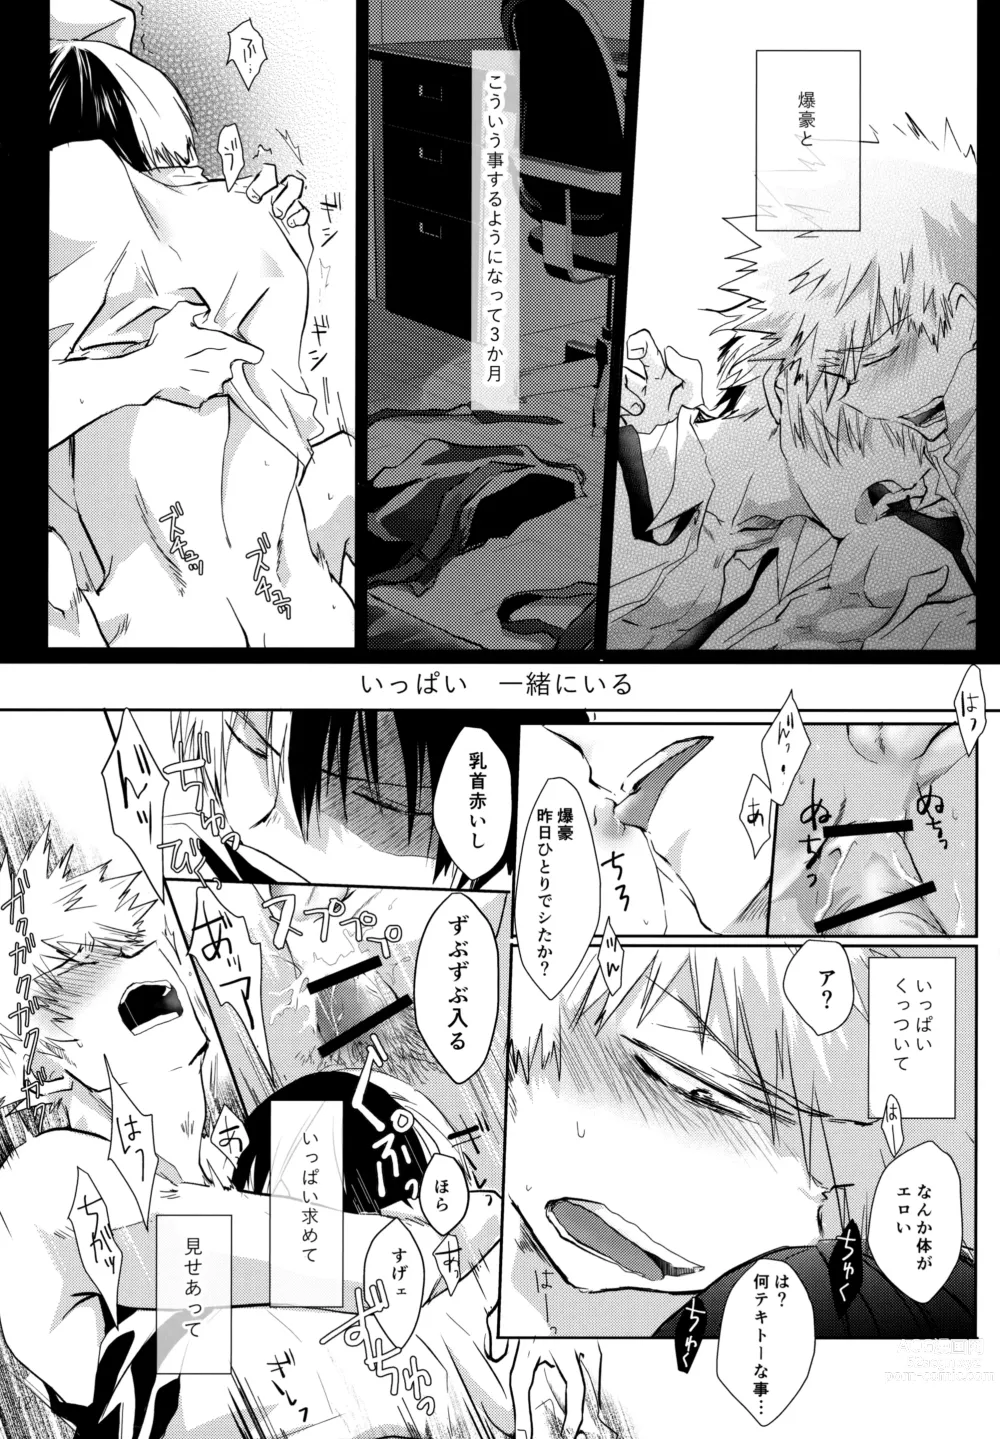 Page 12 of doujinshi Re:Chilled TDBK 2